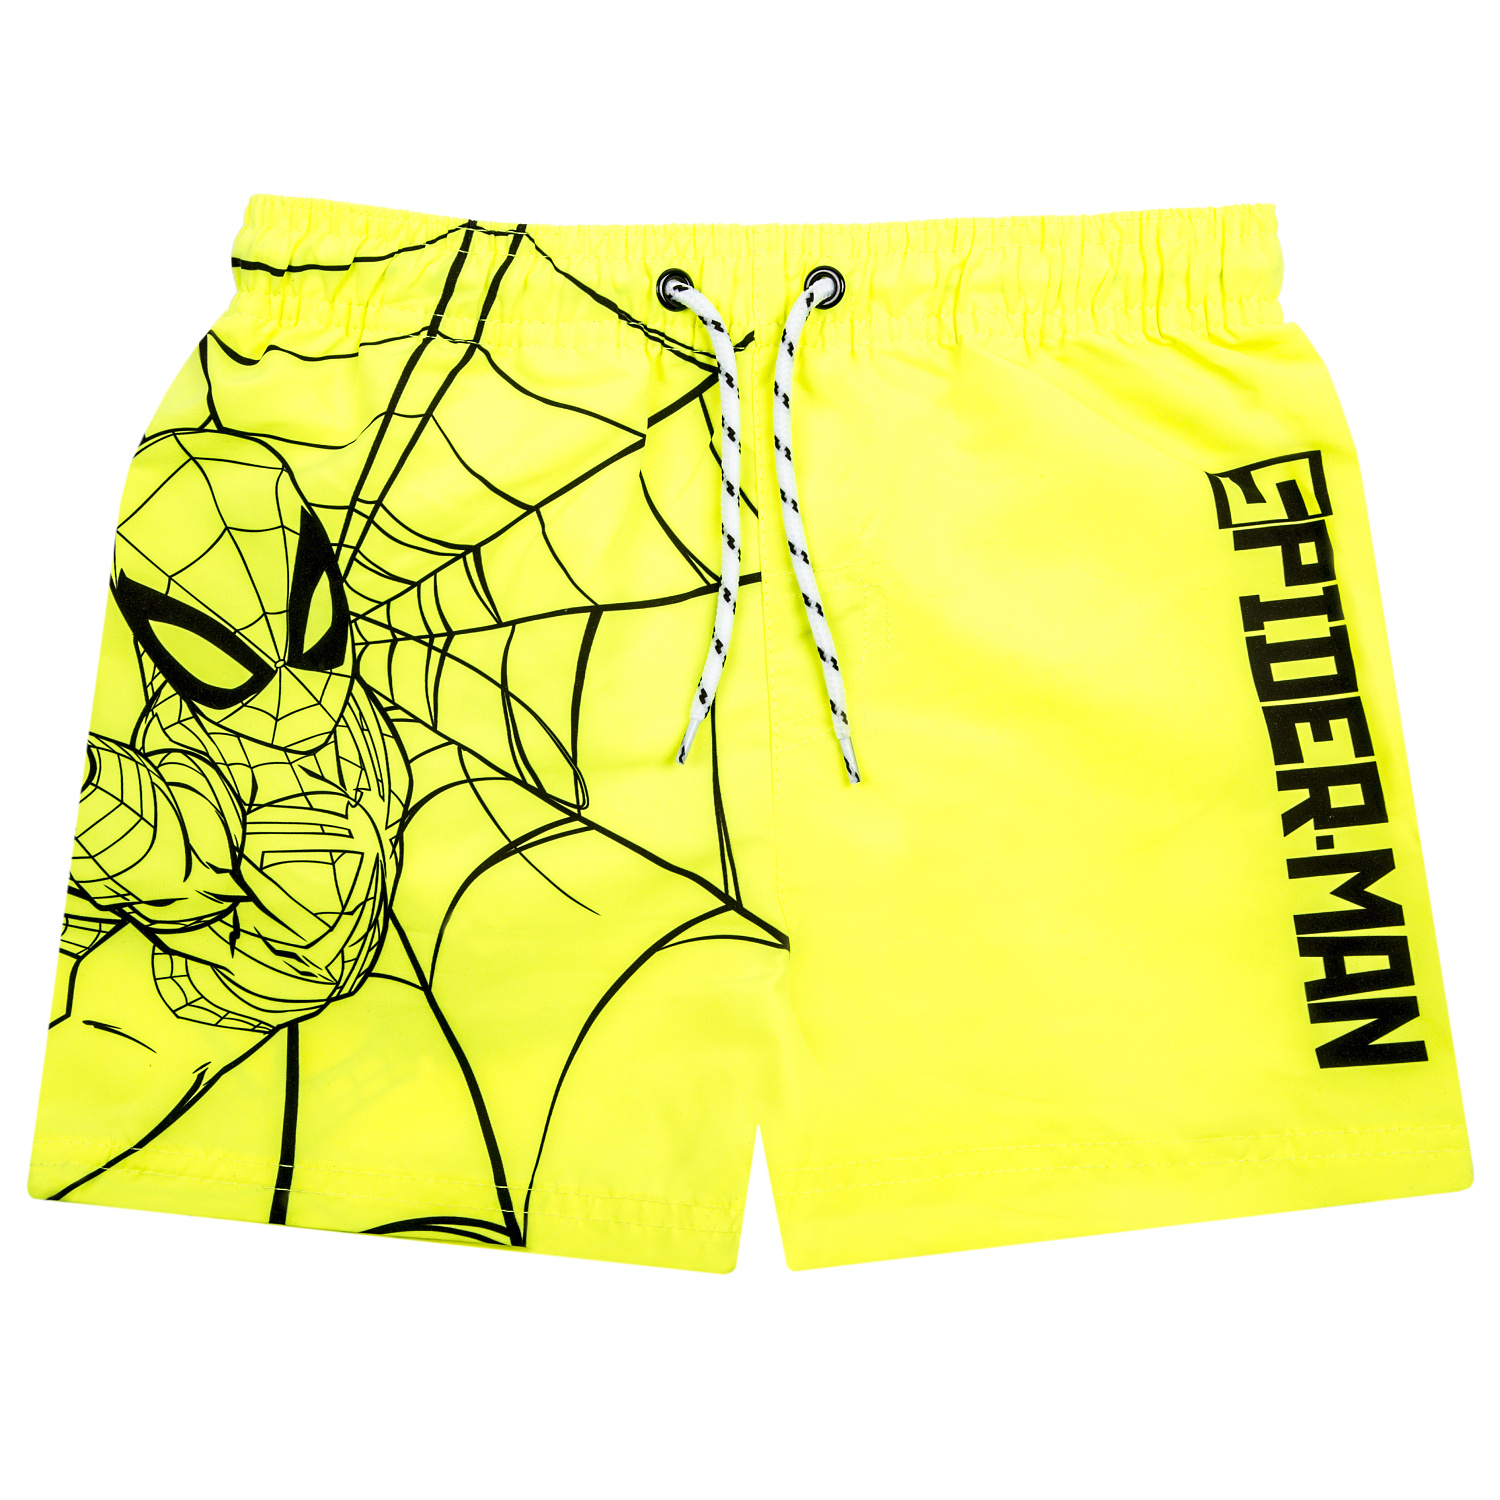 Spider Man - licence Chlapecké koupací kraťasy - Spider-Man UE1883, žlutá Barva: Žlutá, Velikost: 98